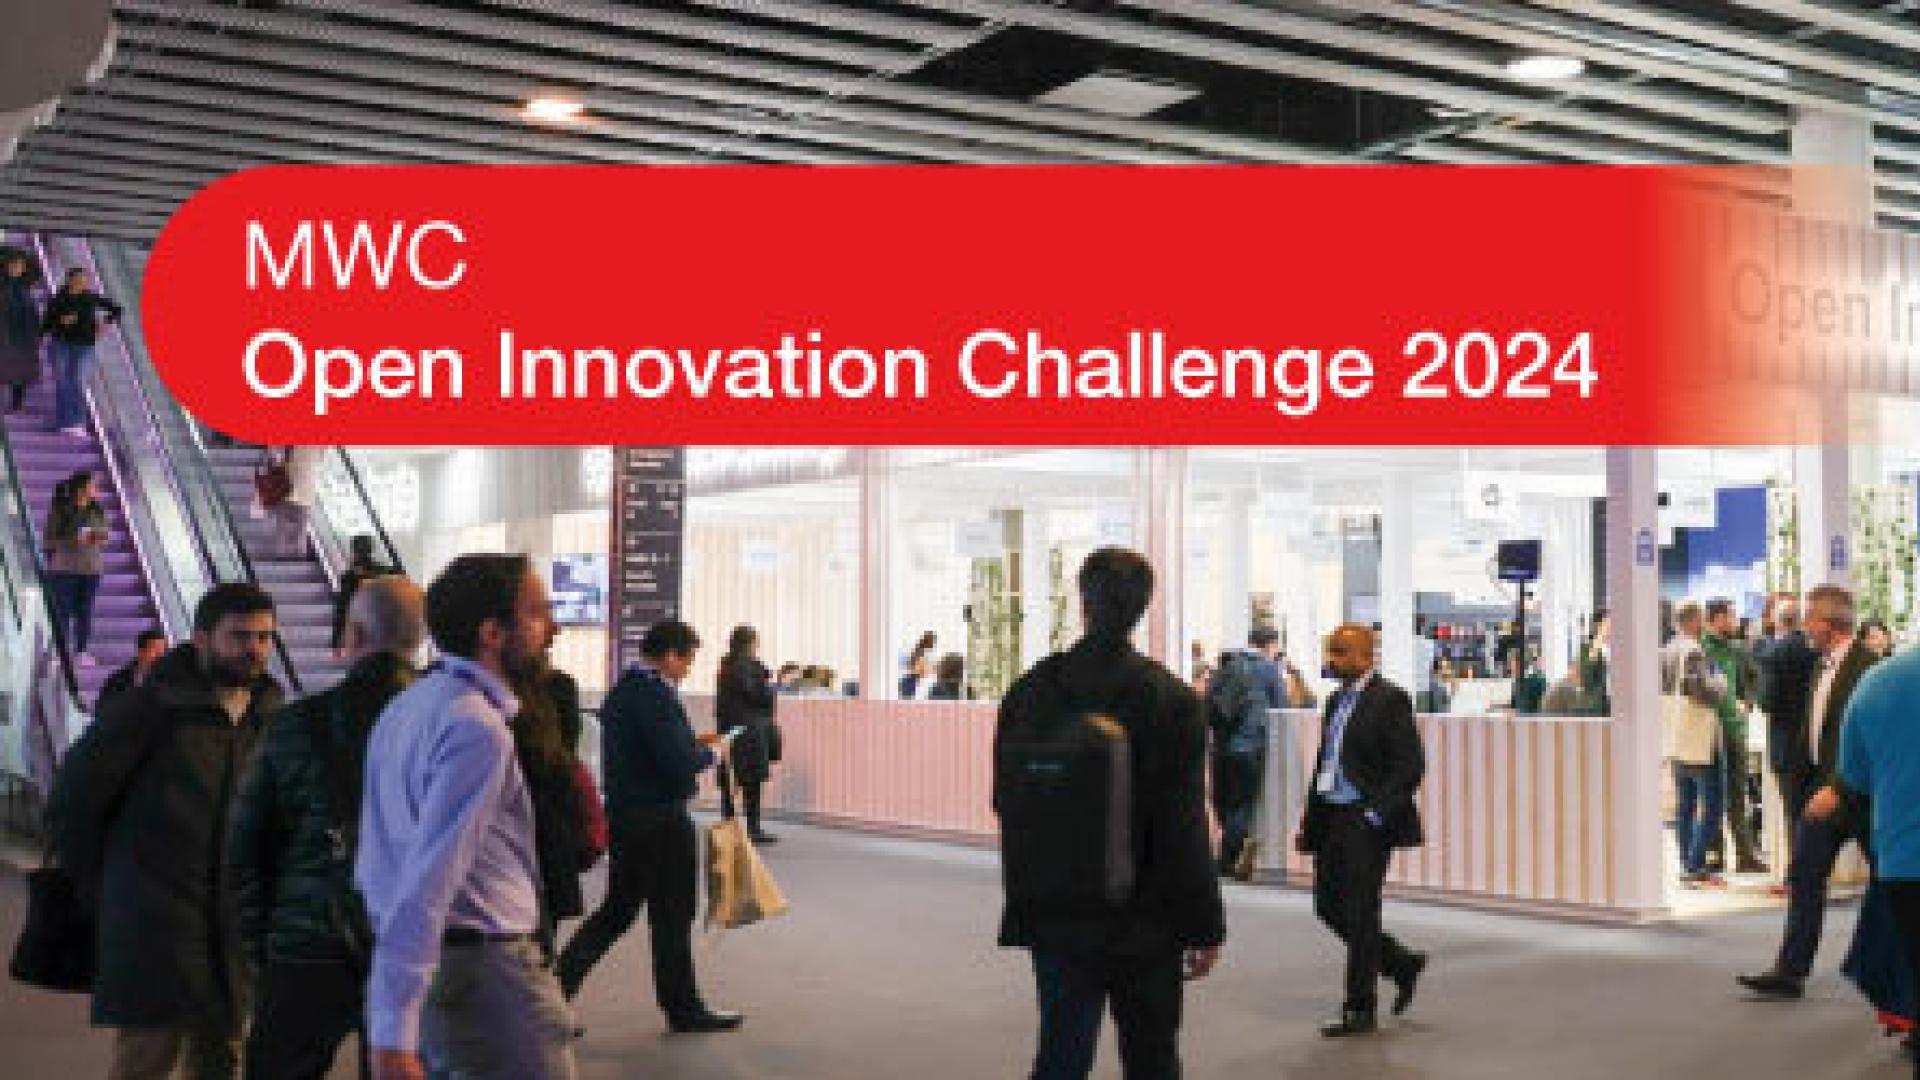 Mobile World Congress innovation challenge 2024